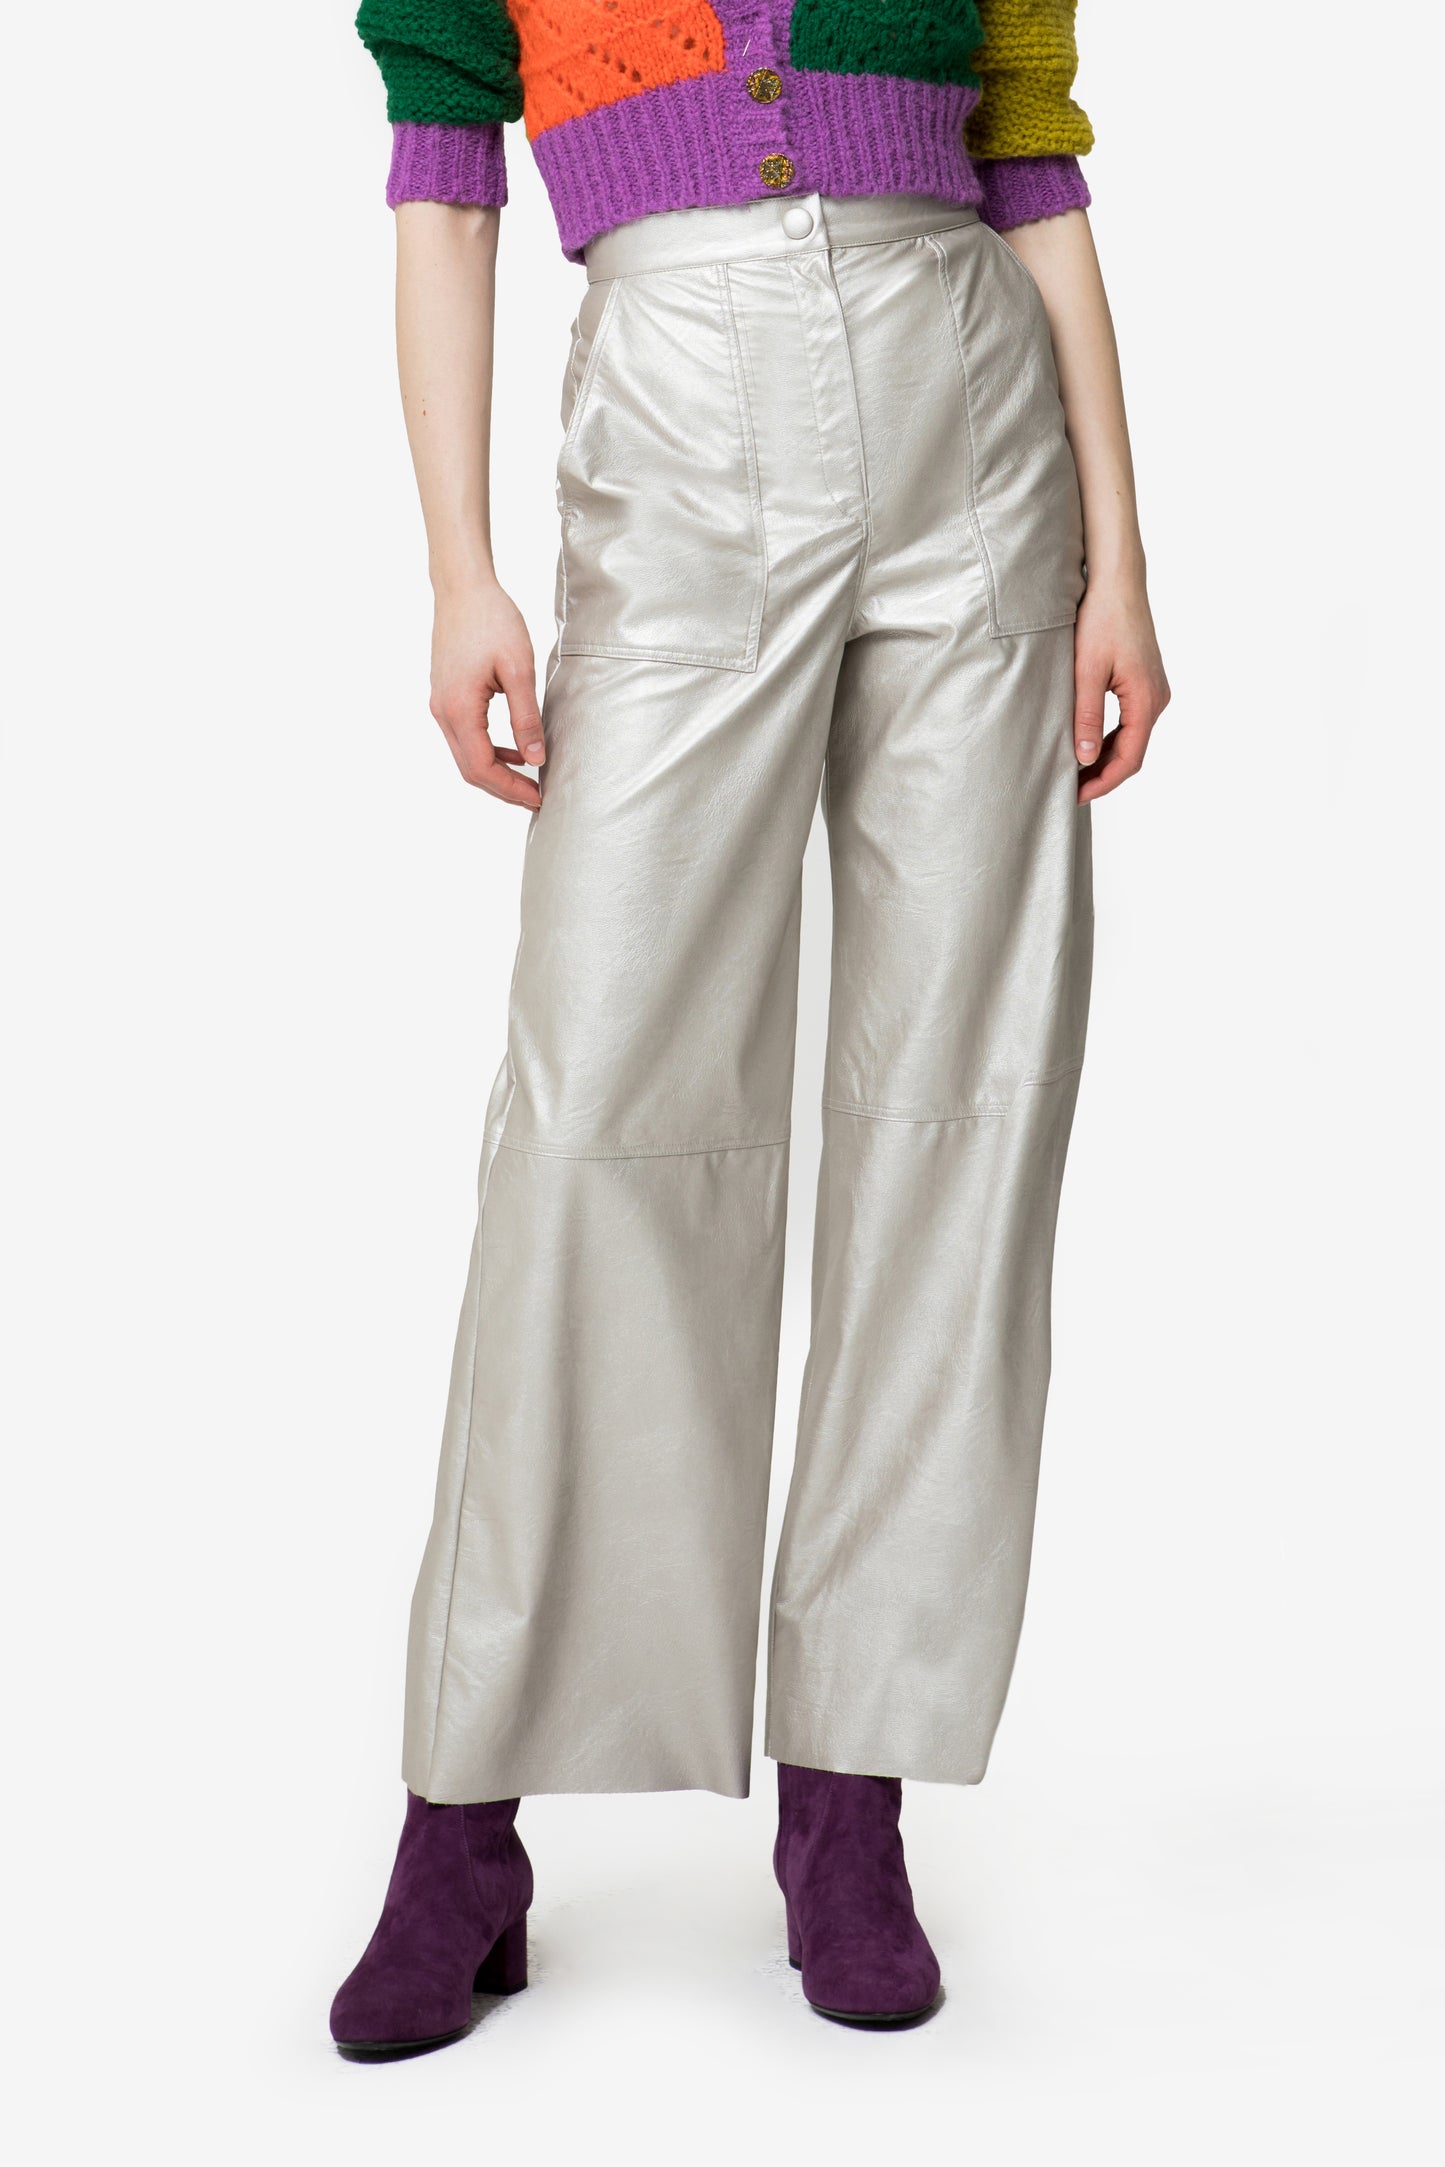 MARY – Pantalone cargo in ecopelle argento